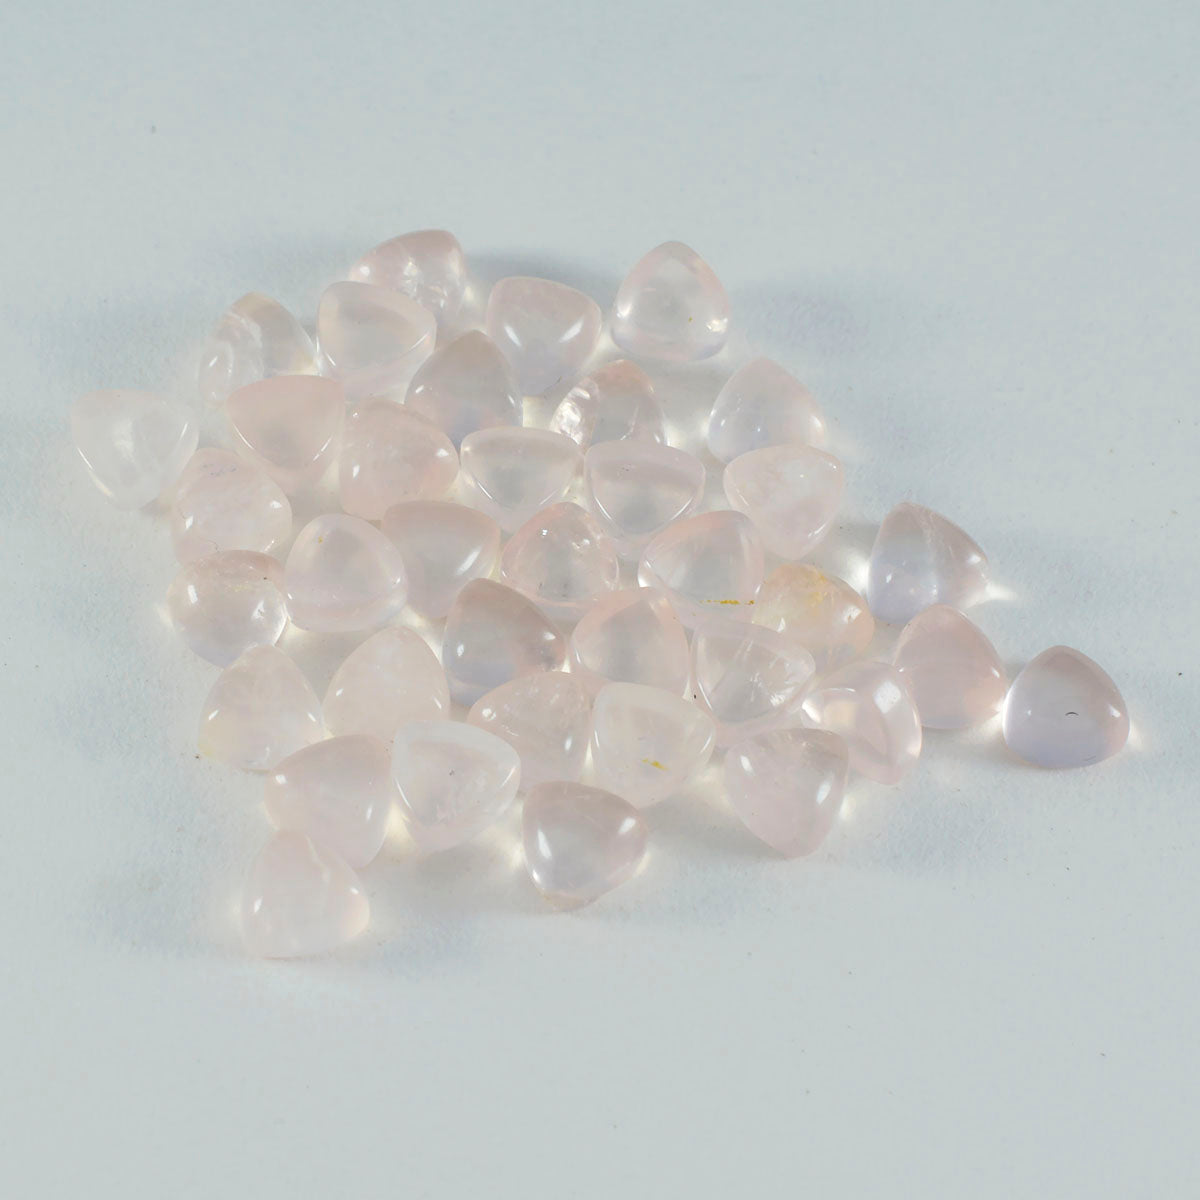 Riyogems 1PC Pink Rose Quartz Cabochon 7x7 mm Trillion Shape AA Quality Loose Stone